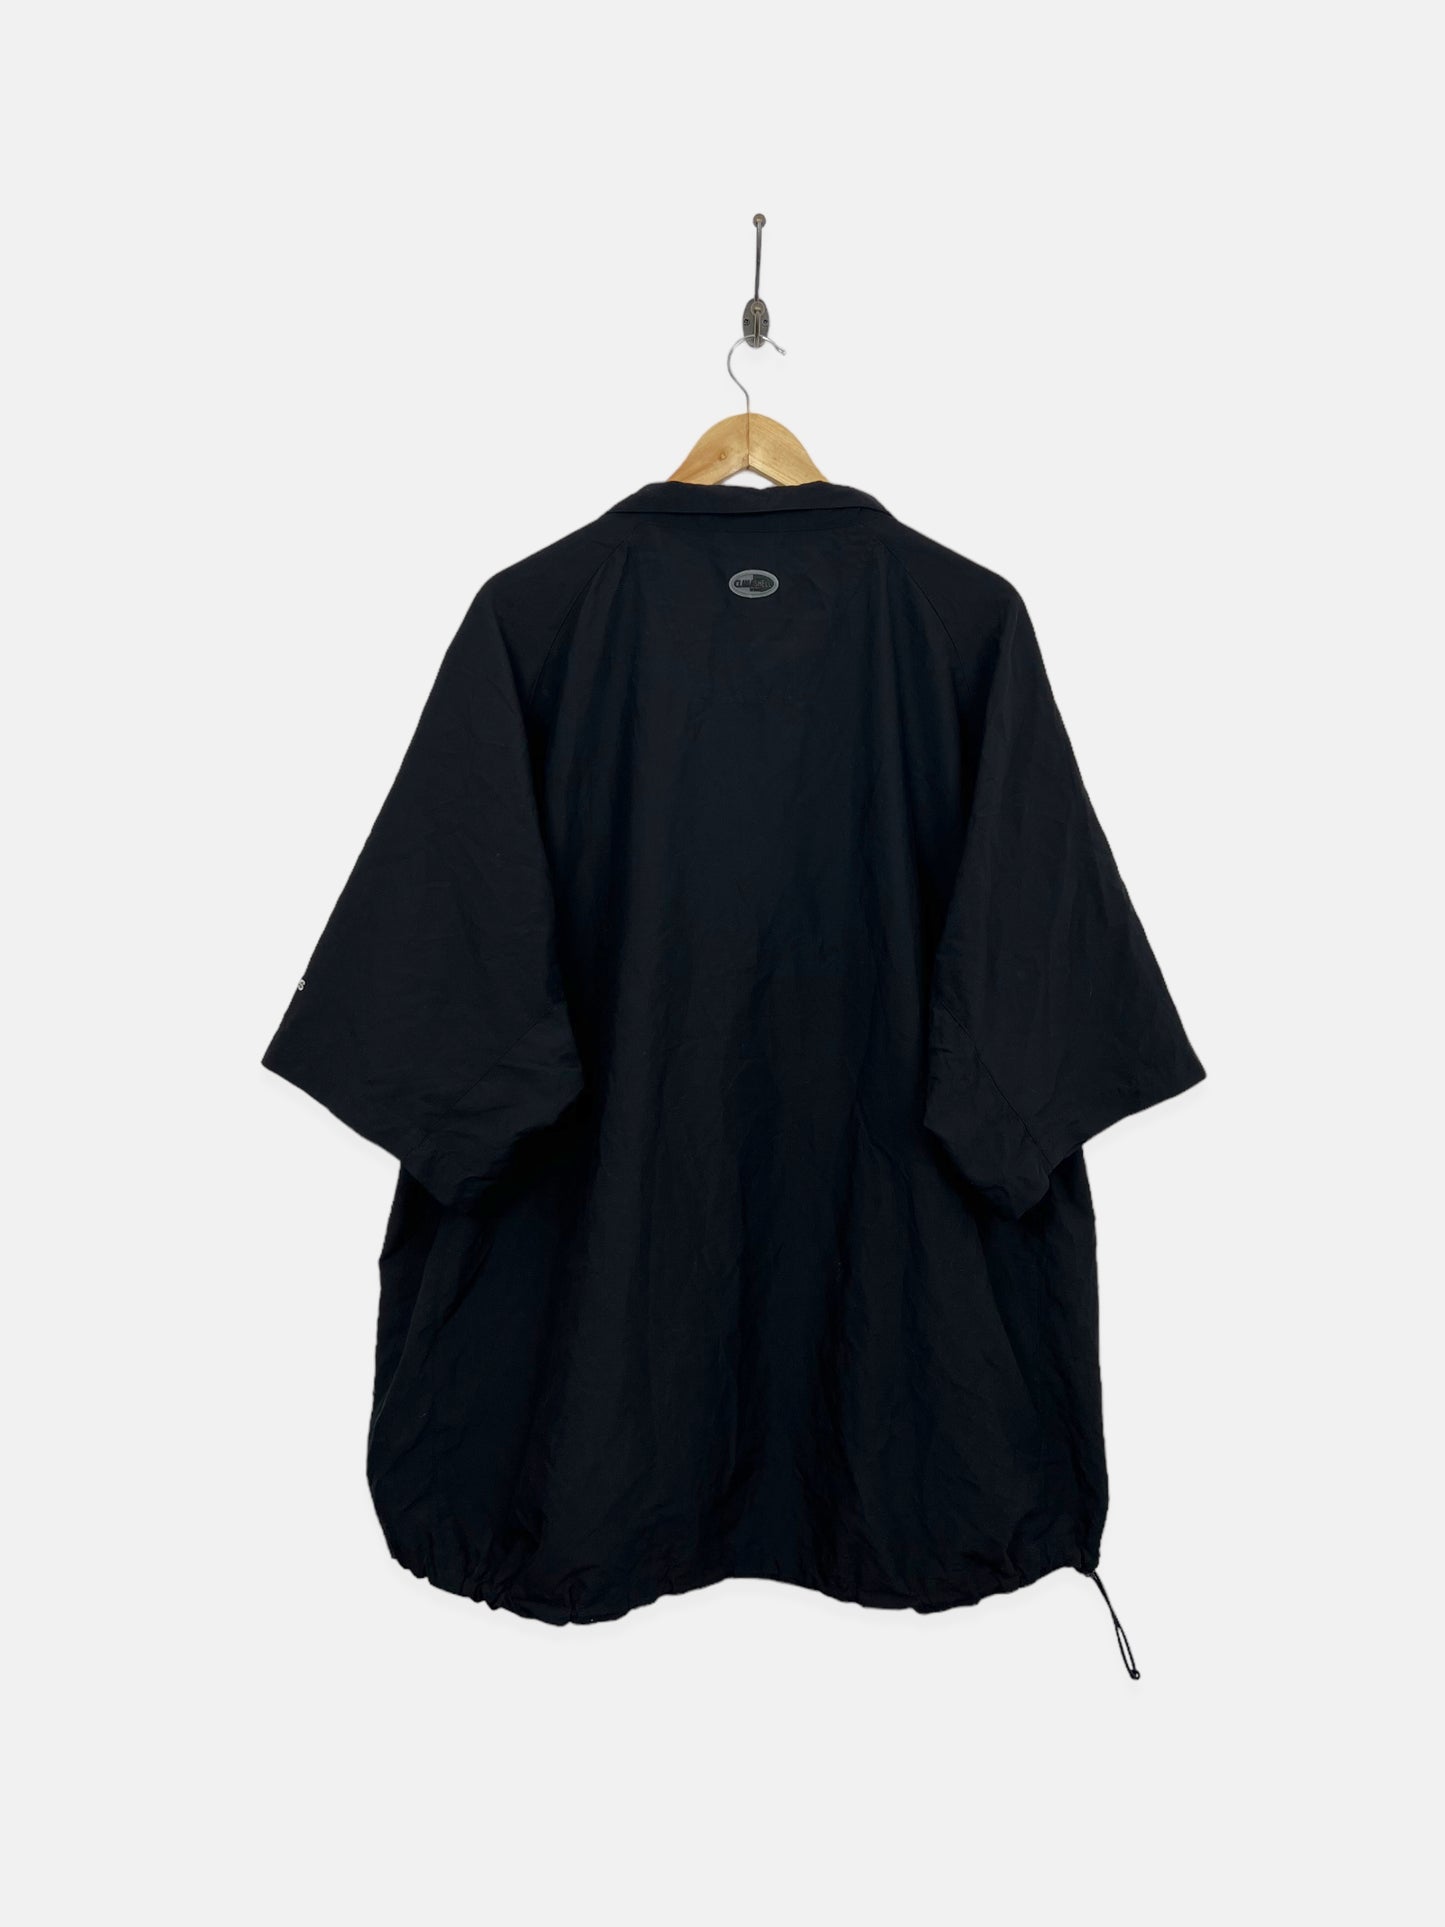 90's Adidas Embroidered Vintage Short Sleeve Jacket Size 2XL